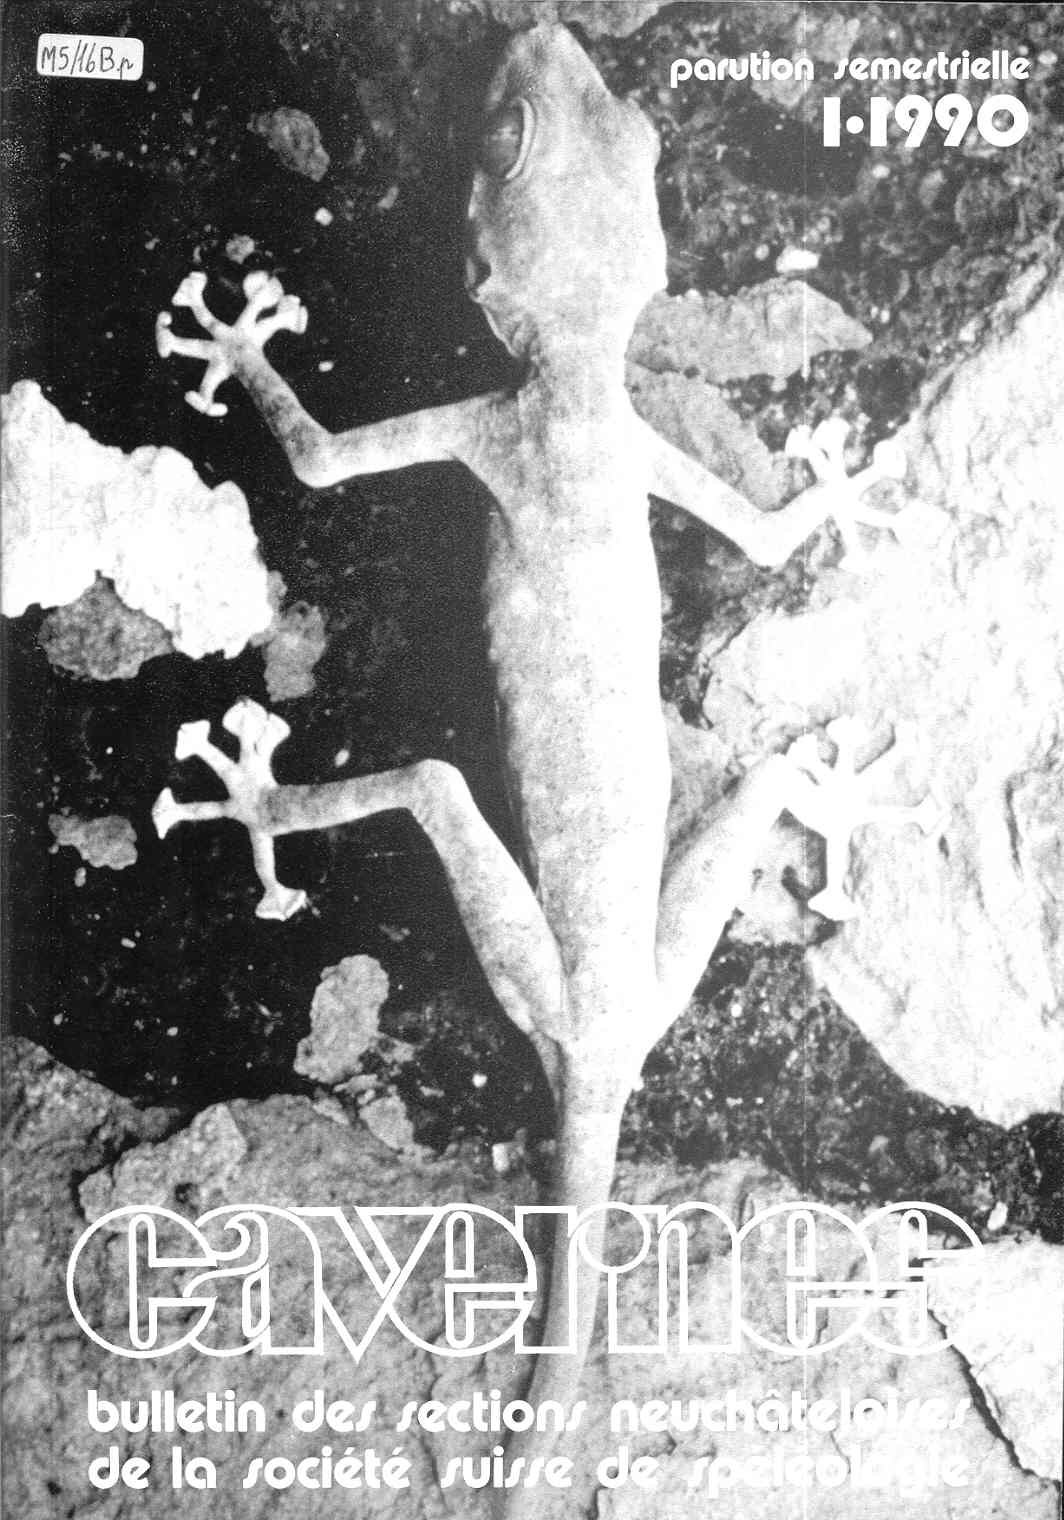 Cavernes/copertina anno 1990 n°1 e 2.jpg